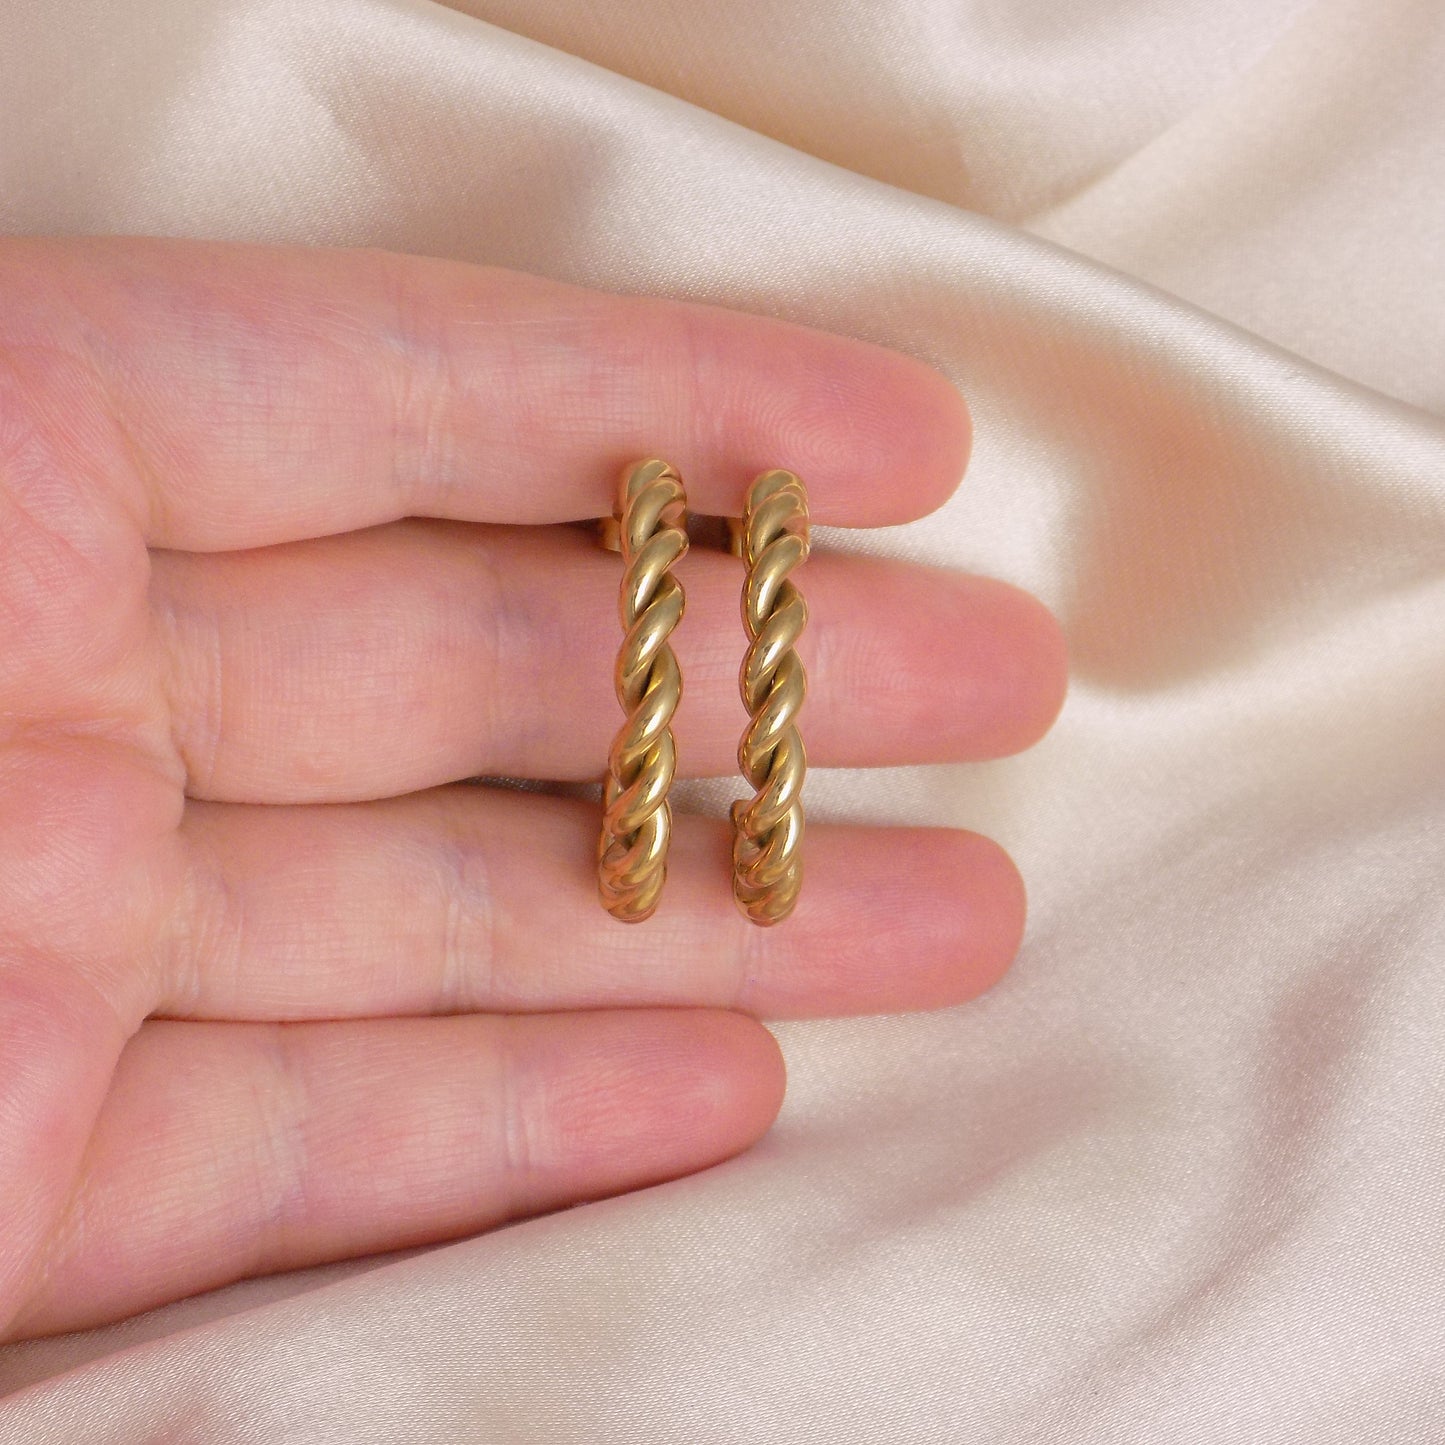 18K Gold Twisted Hoop Earrings Studs Stainless Steel - Minimalist Everyday Jewelry